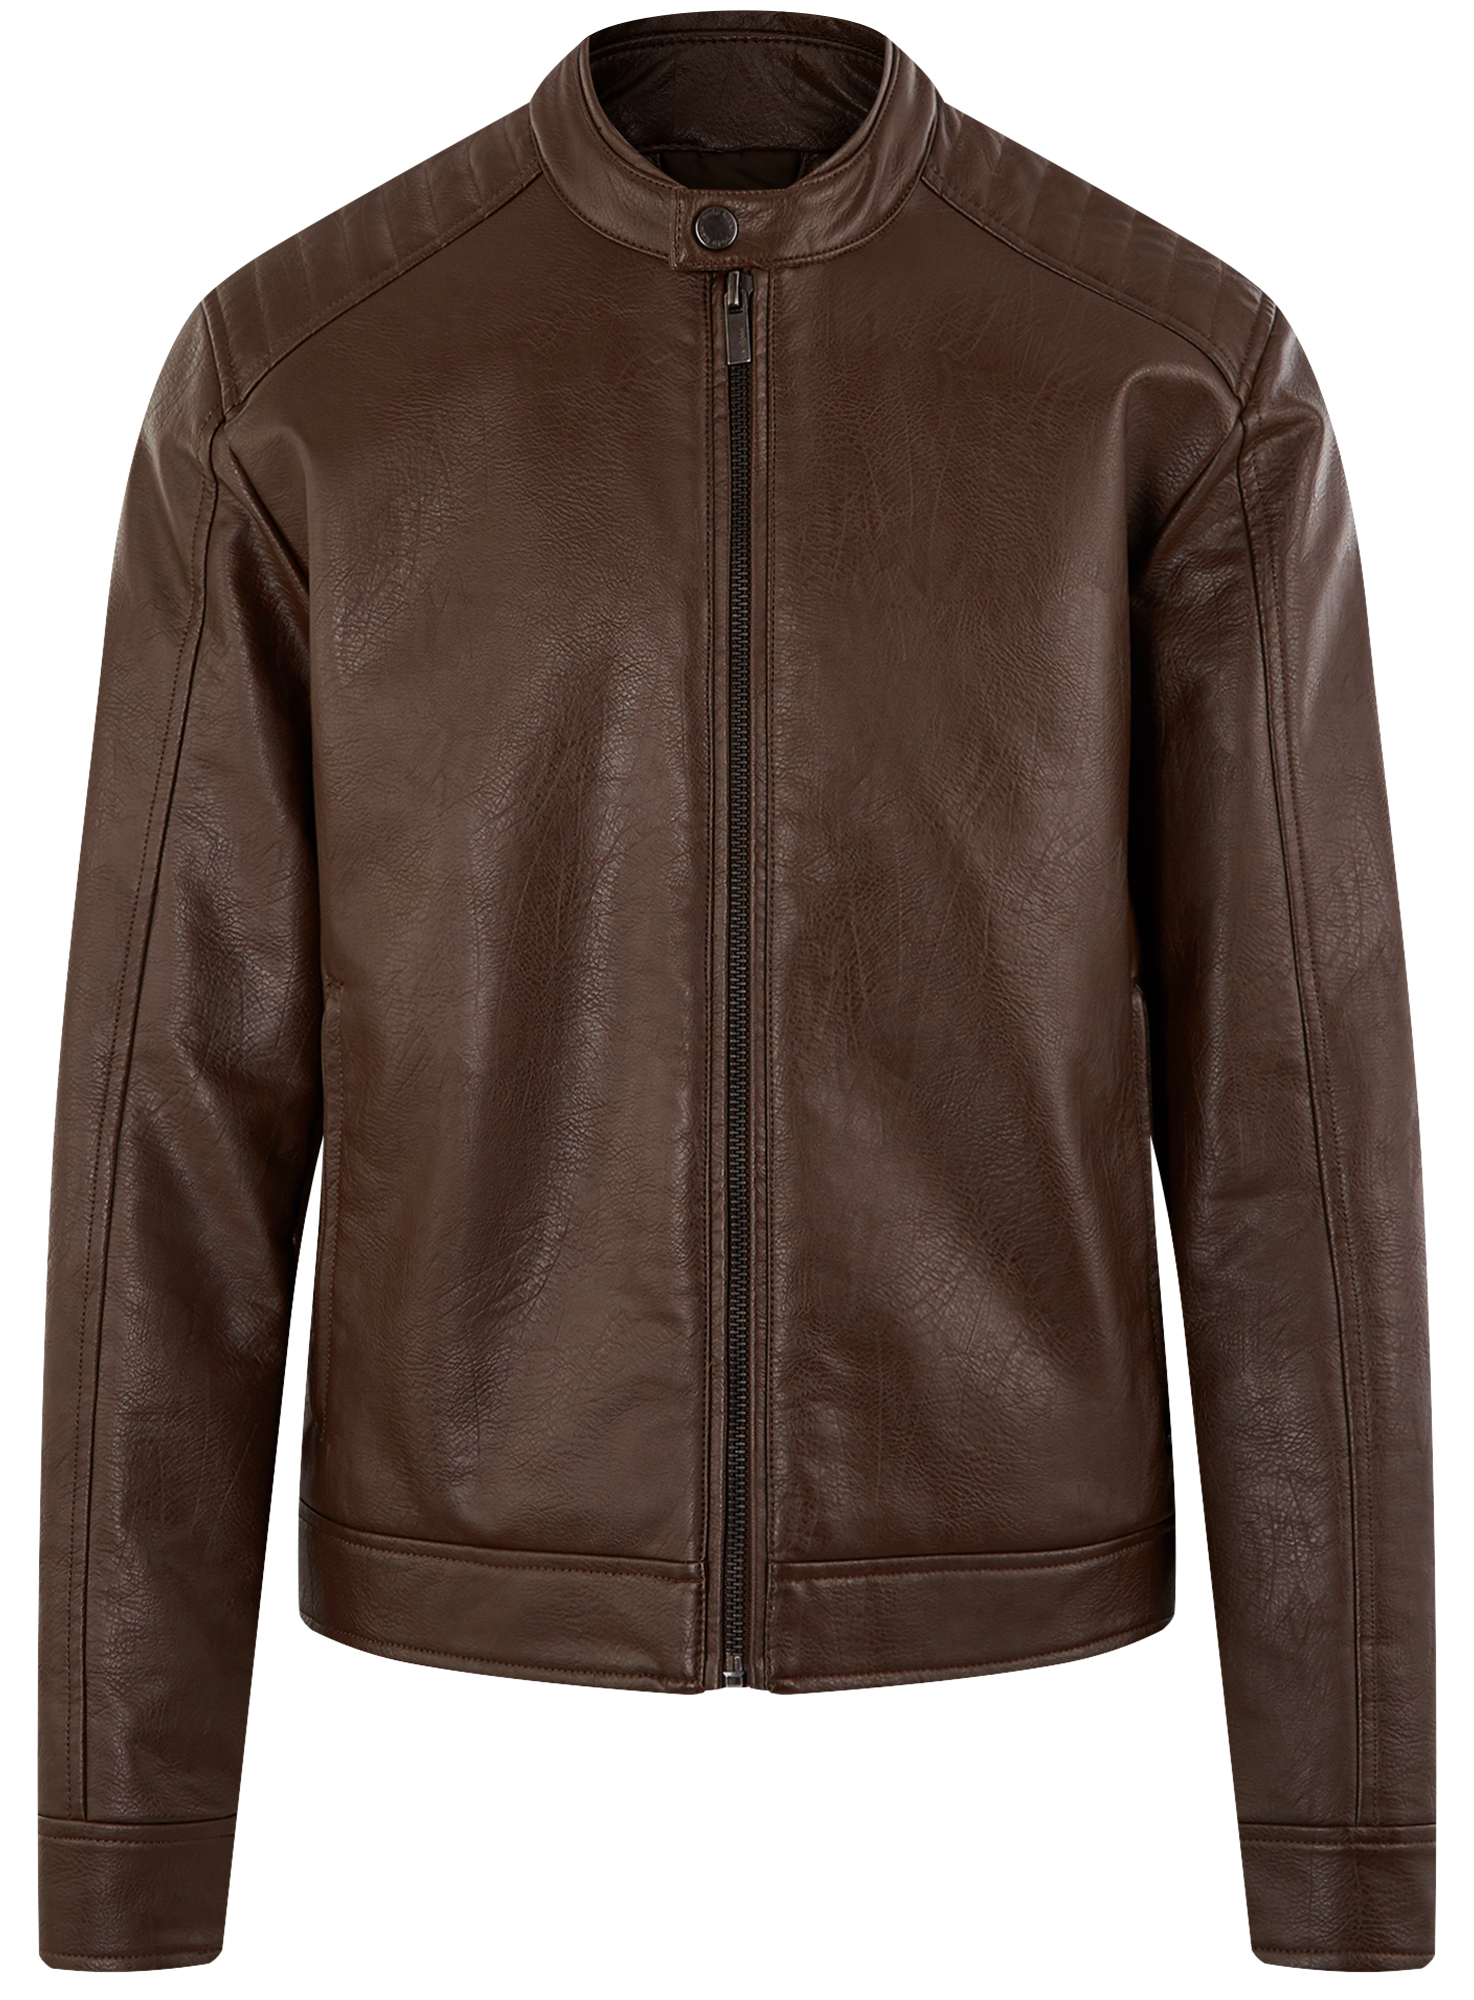 Кожаная куртка мужская oodji 1L521001M коричневая 2XL